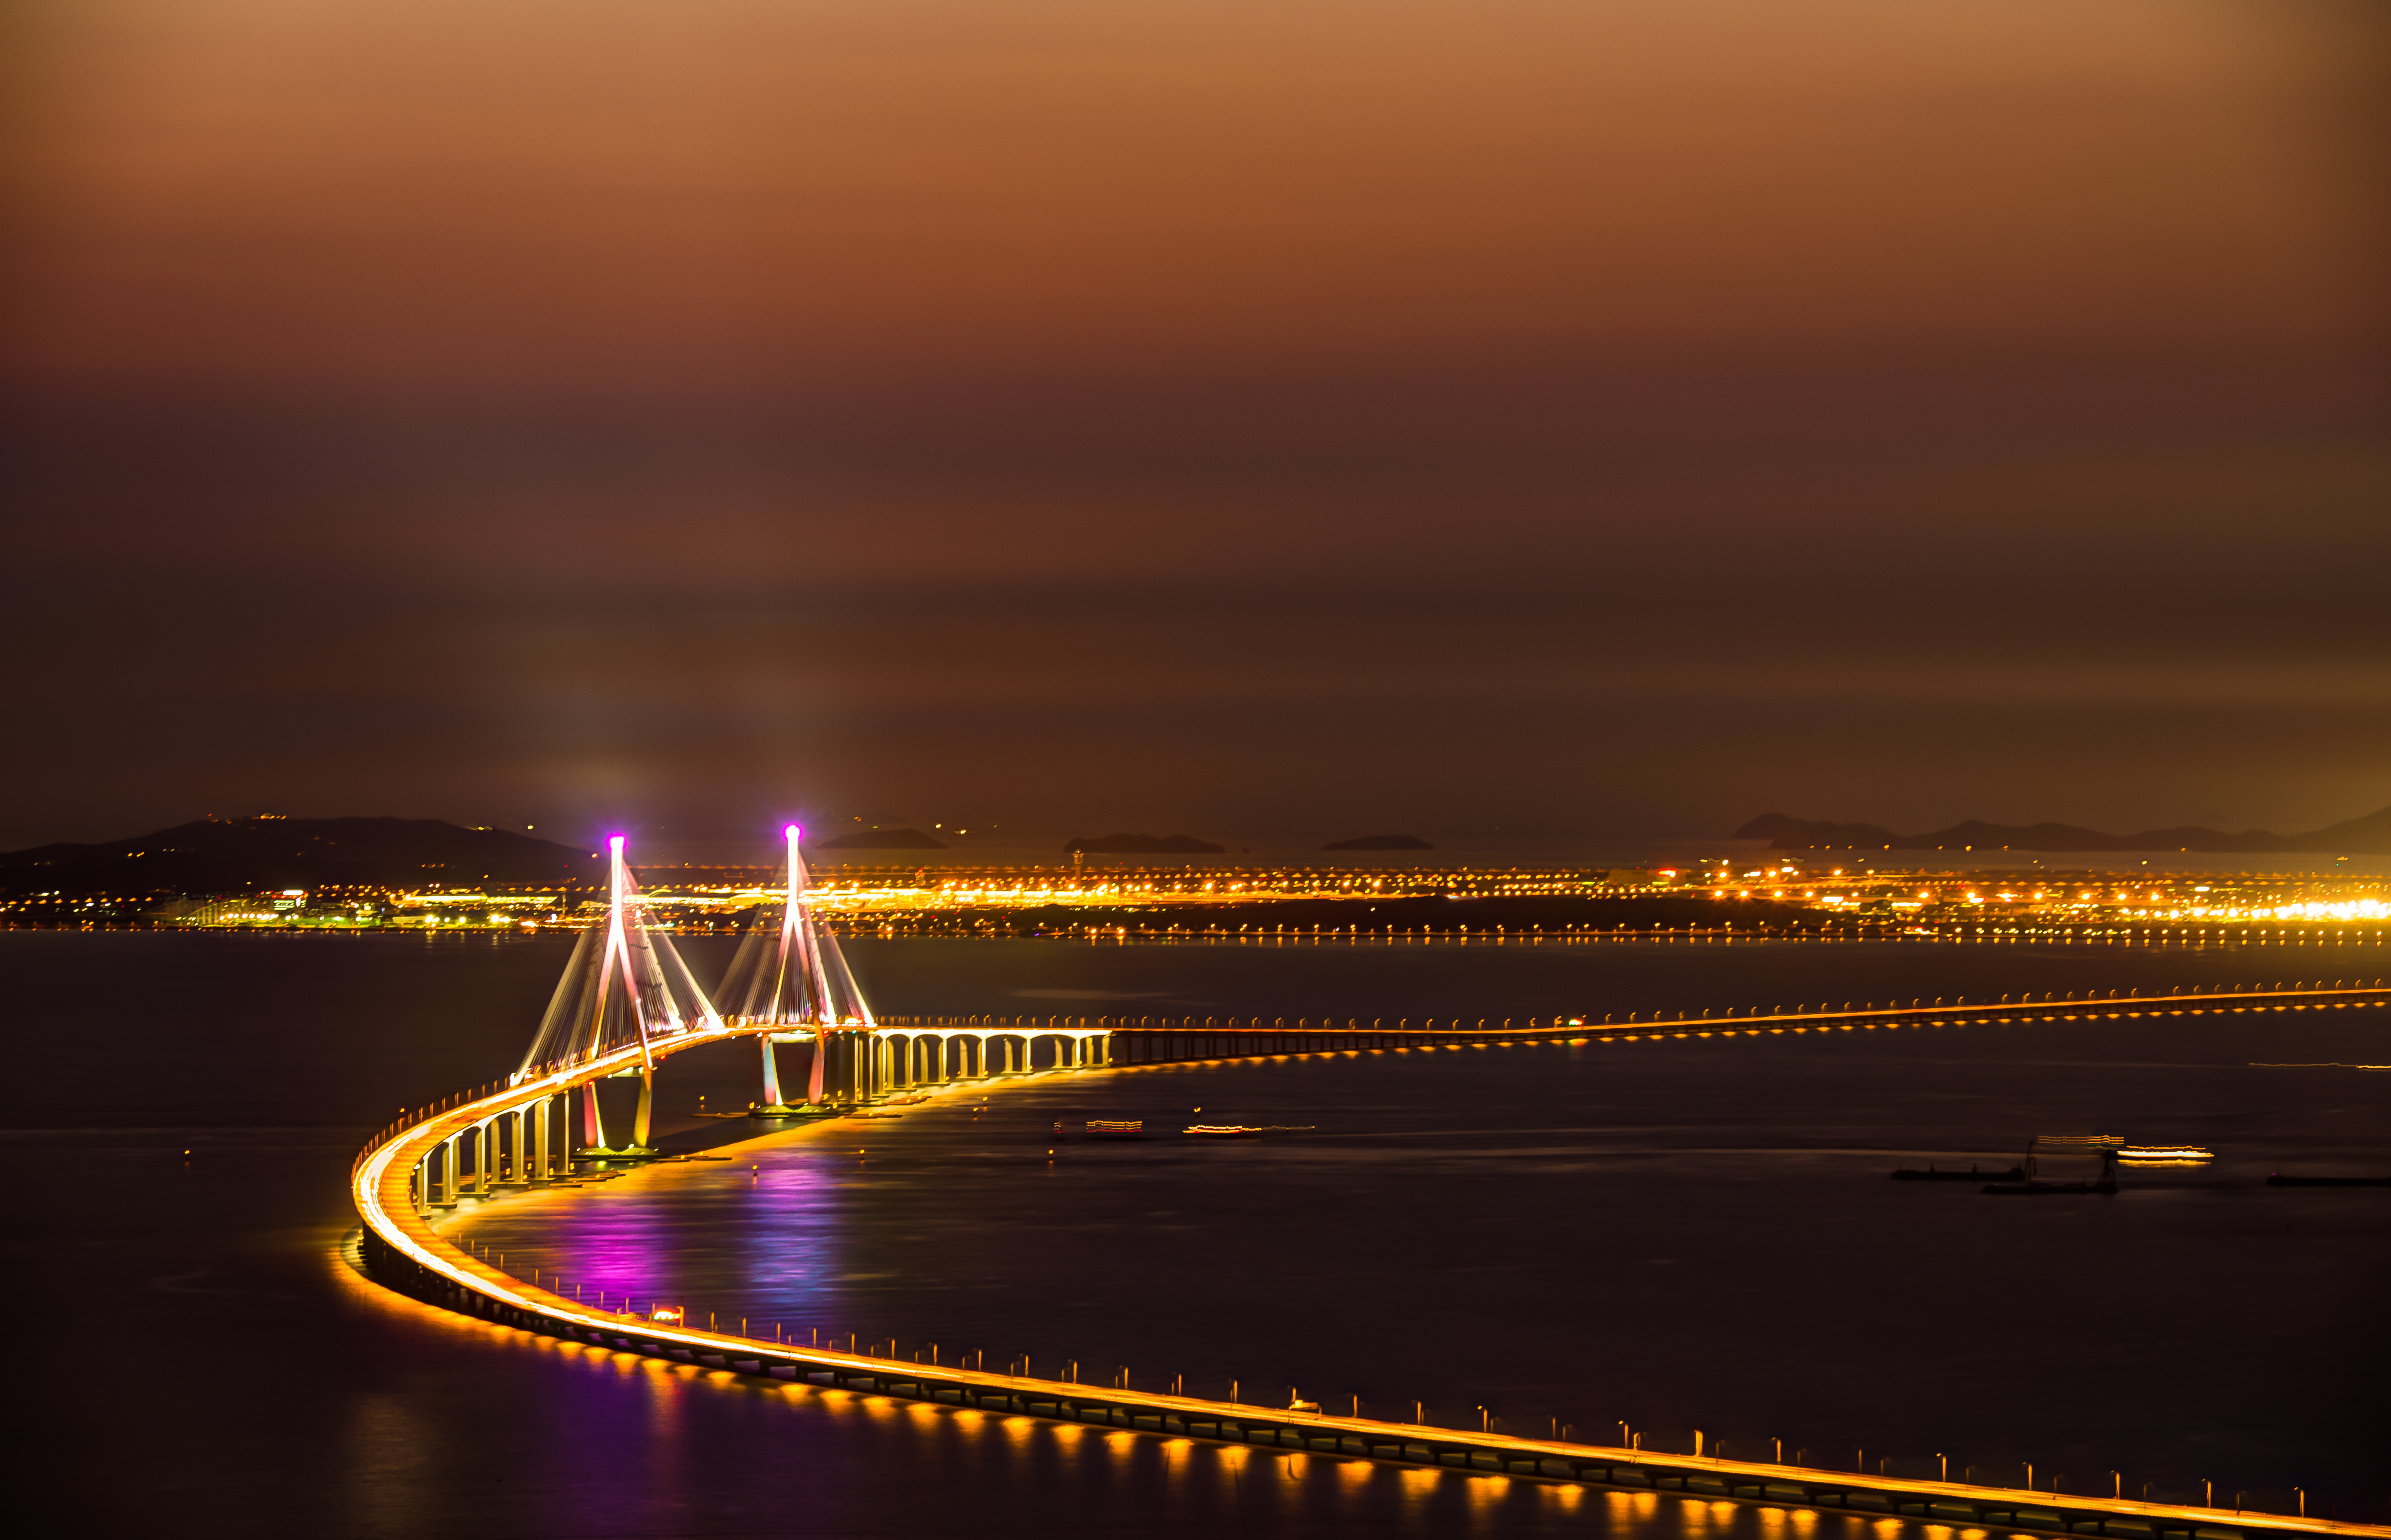 Amazing Incheon Songdo Bridge Pictures & Backgrounds